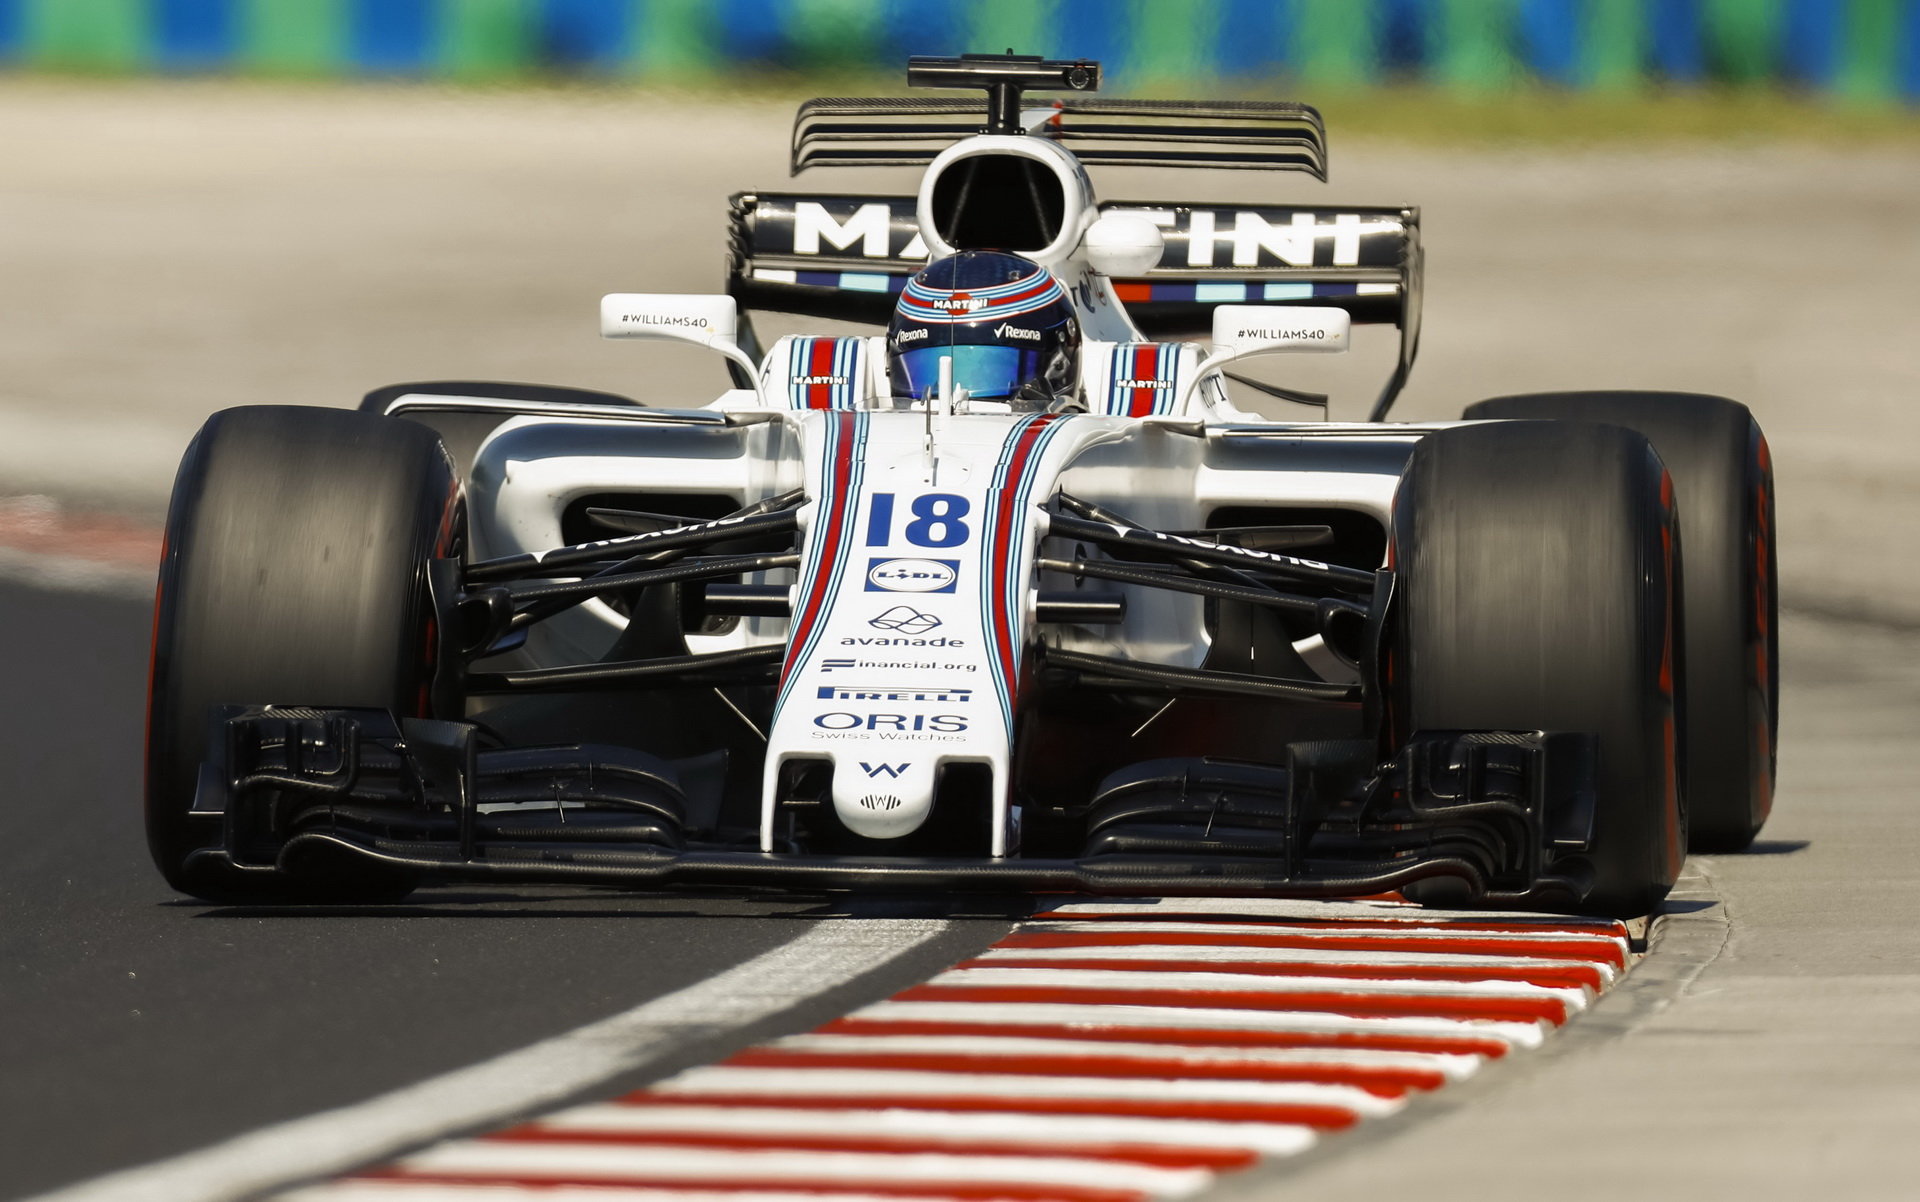 Lance Stroll testuje první den vůz Williams FW38 - Mercedes v Maďarsku